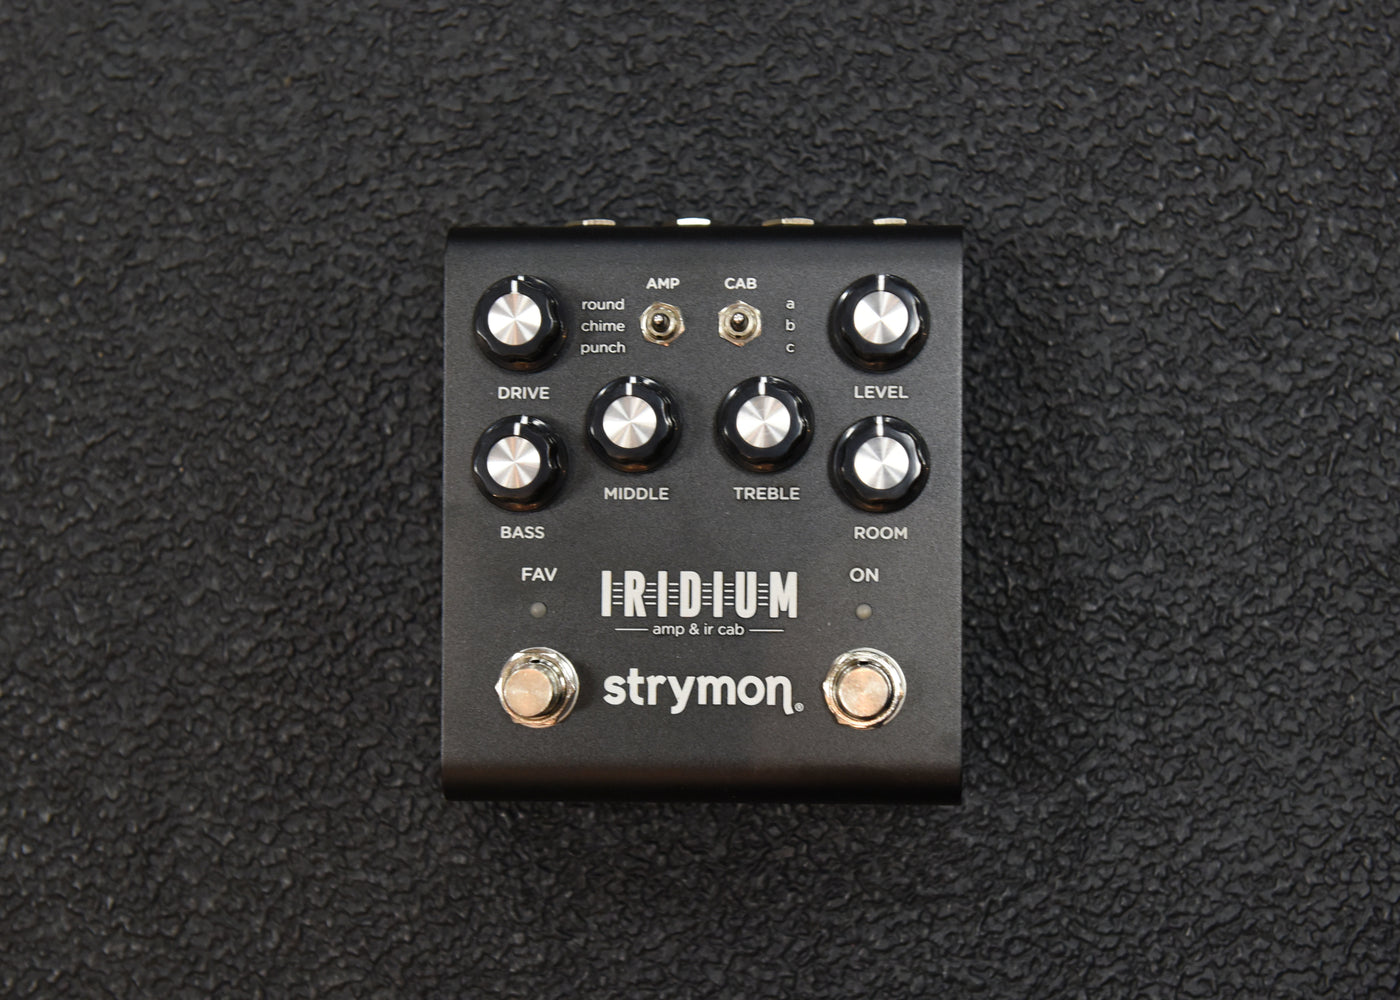 Iridium - $399